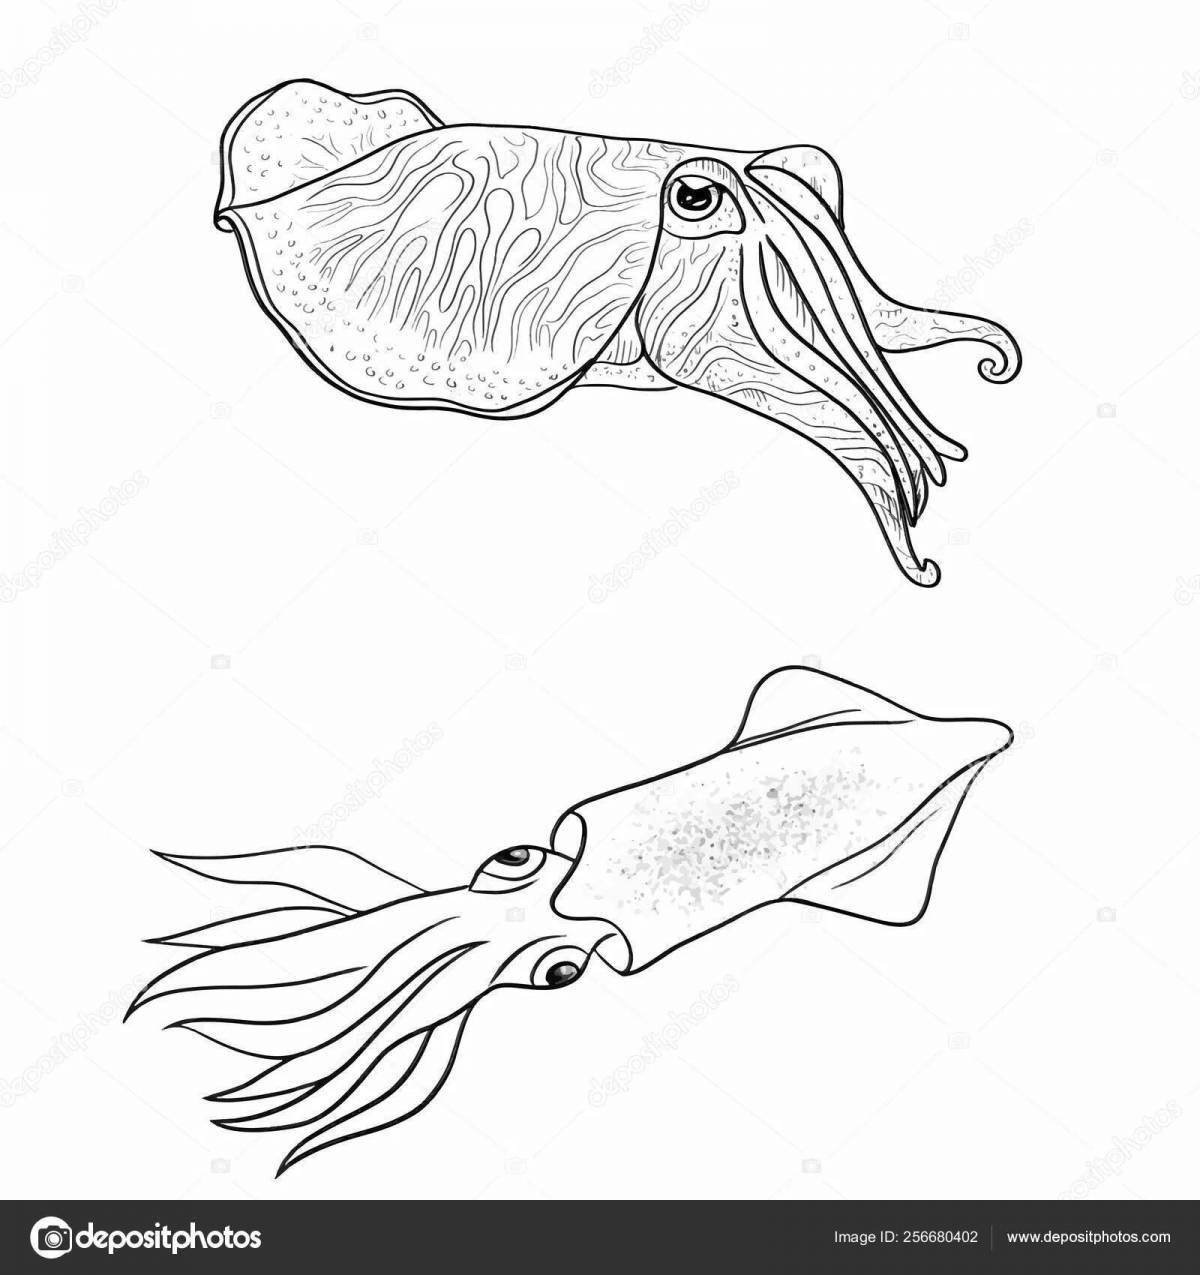 Coloring book magic cuttlefish